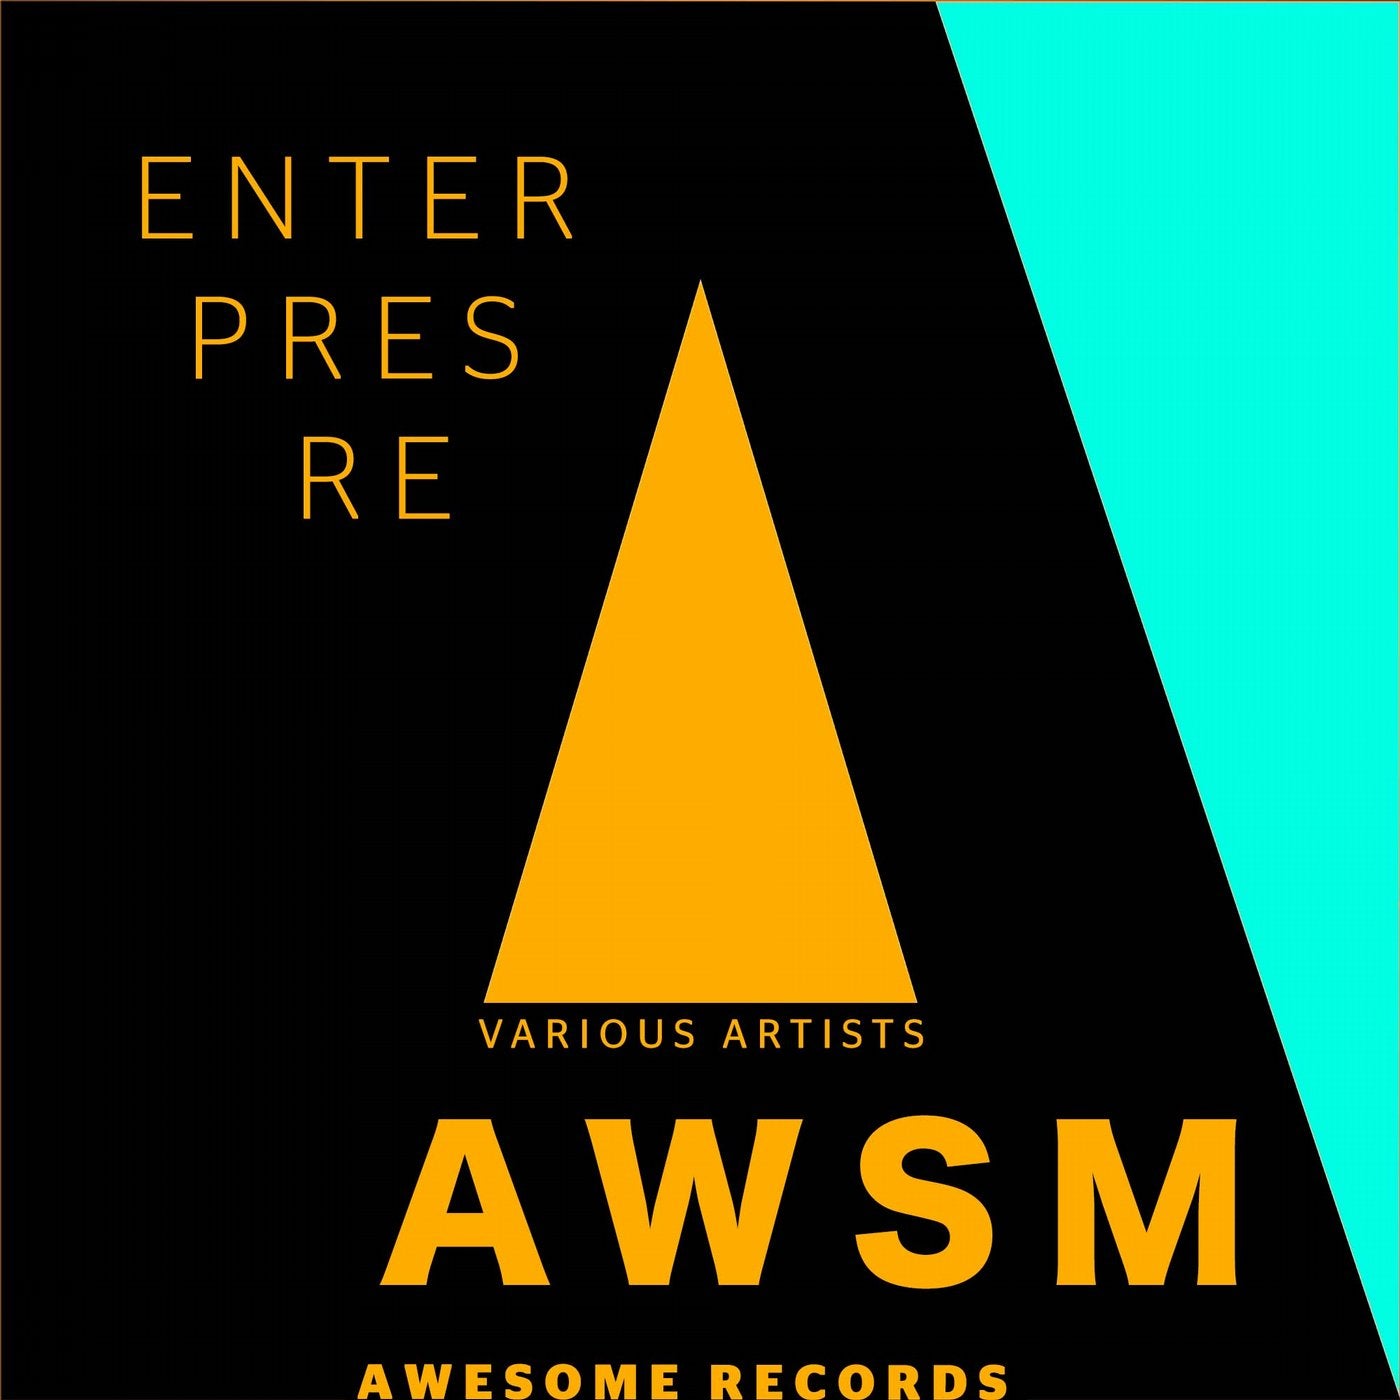 Awsm Representer